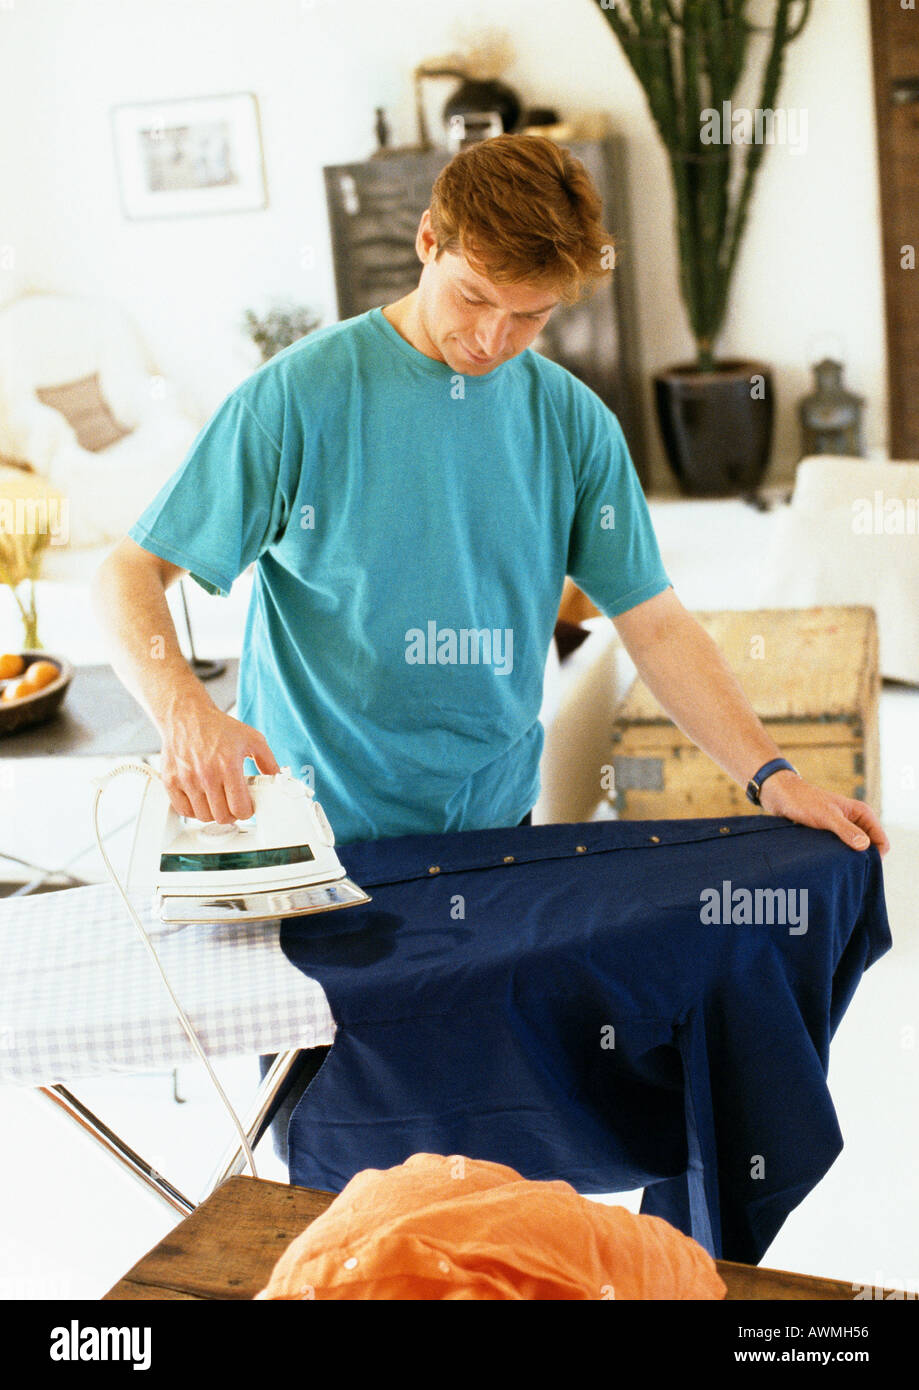 Man ironing clothes Stock Photo